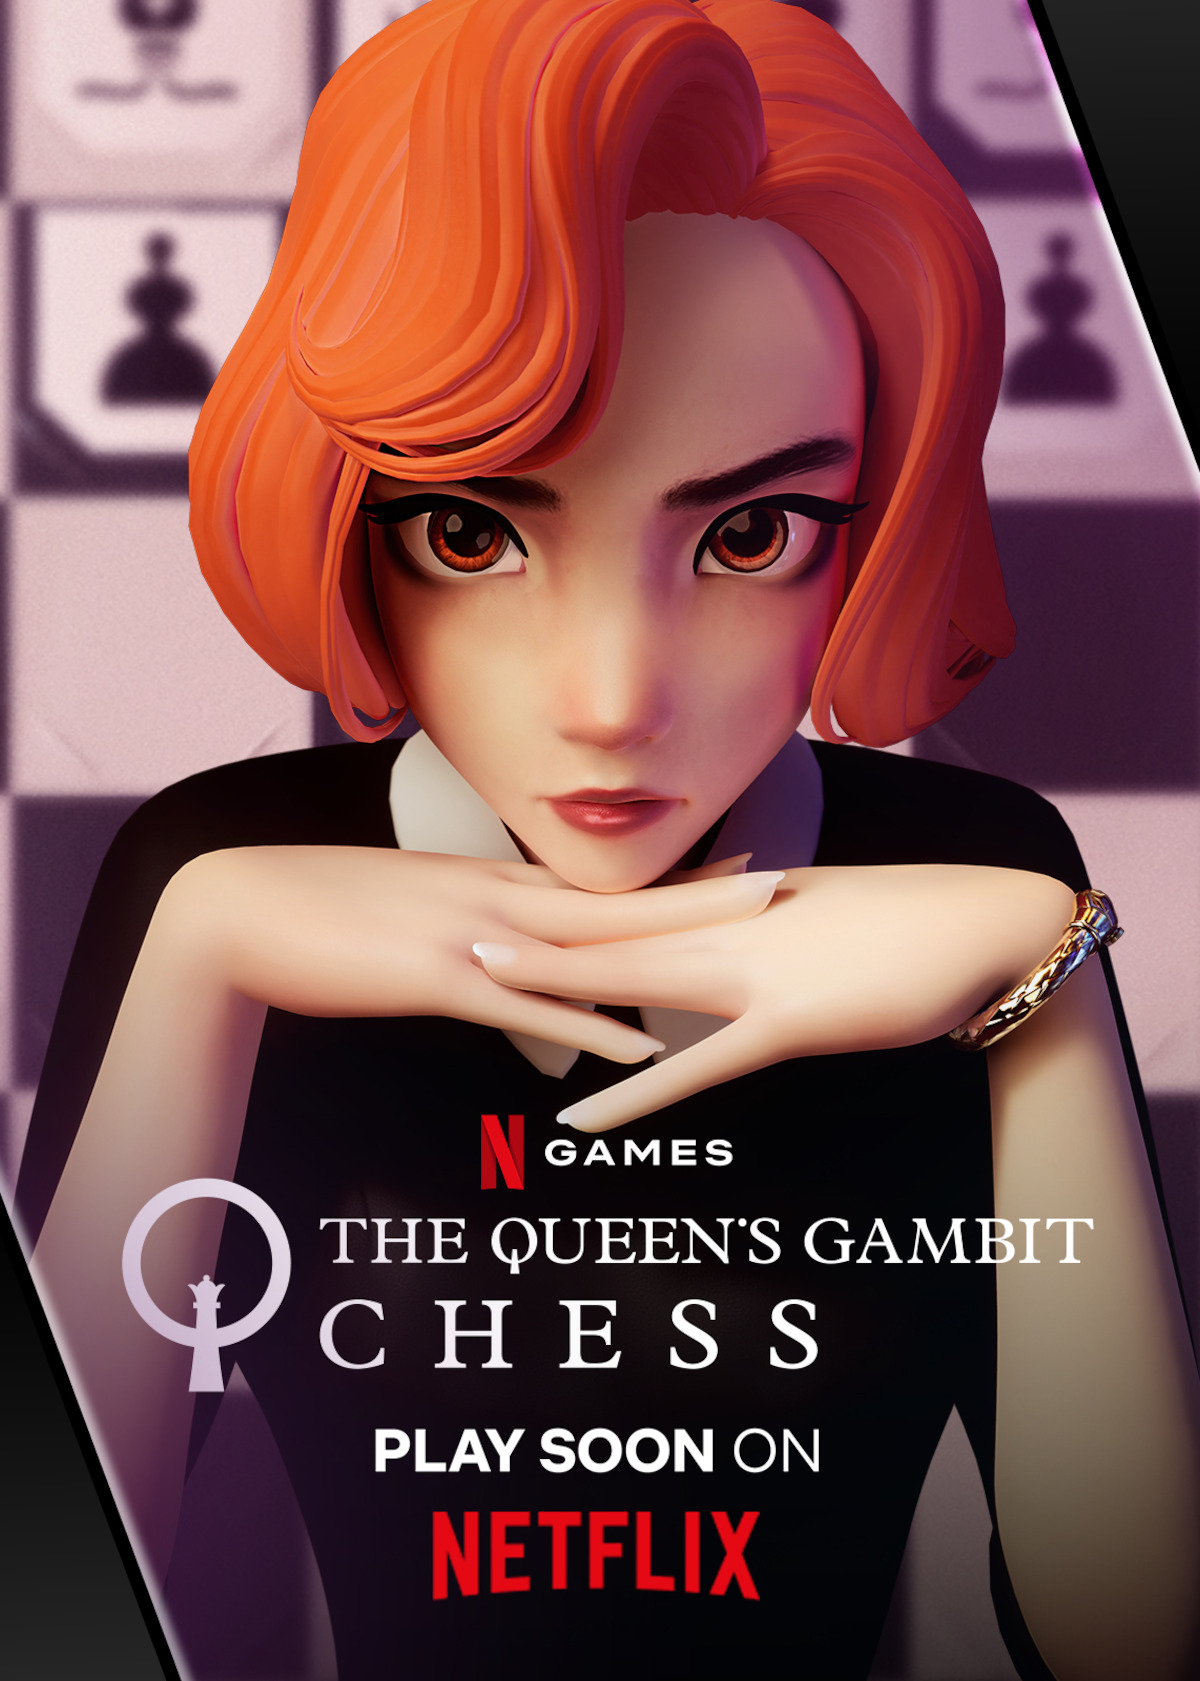 The Queen's Gambit Chess' Game Is Coming to Netflix - Netflix Tudum